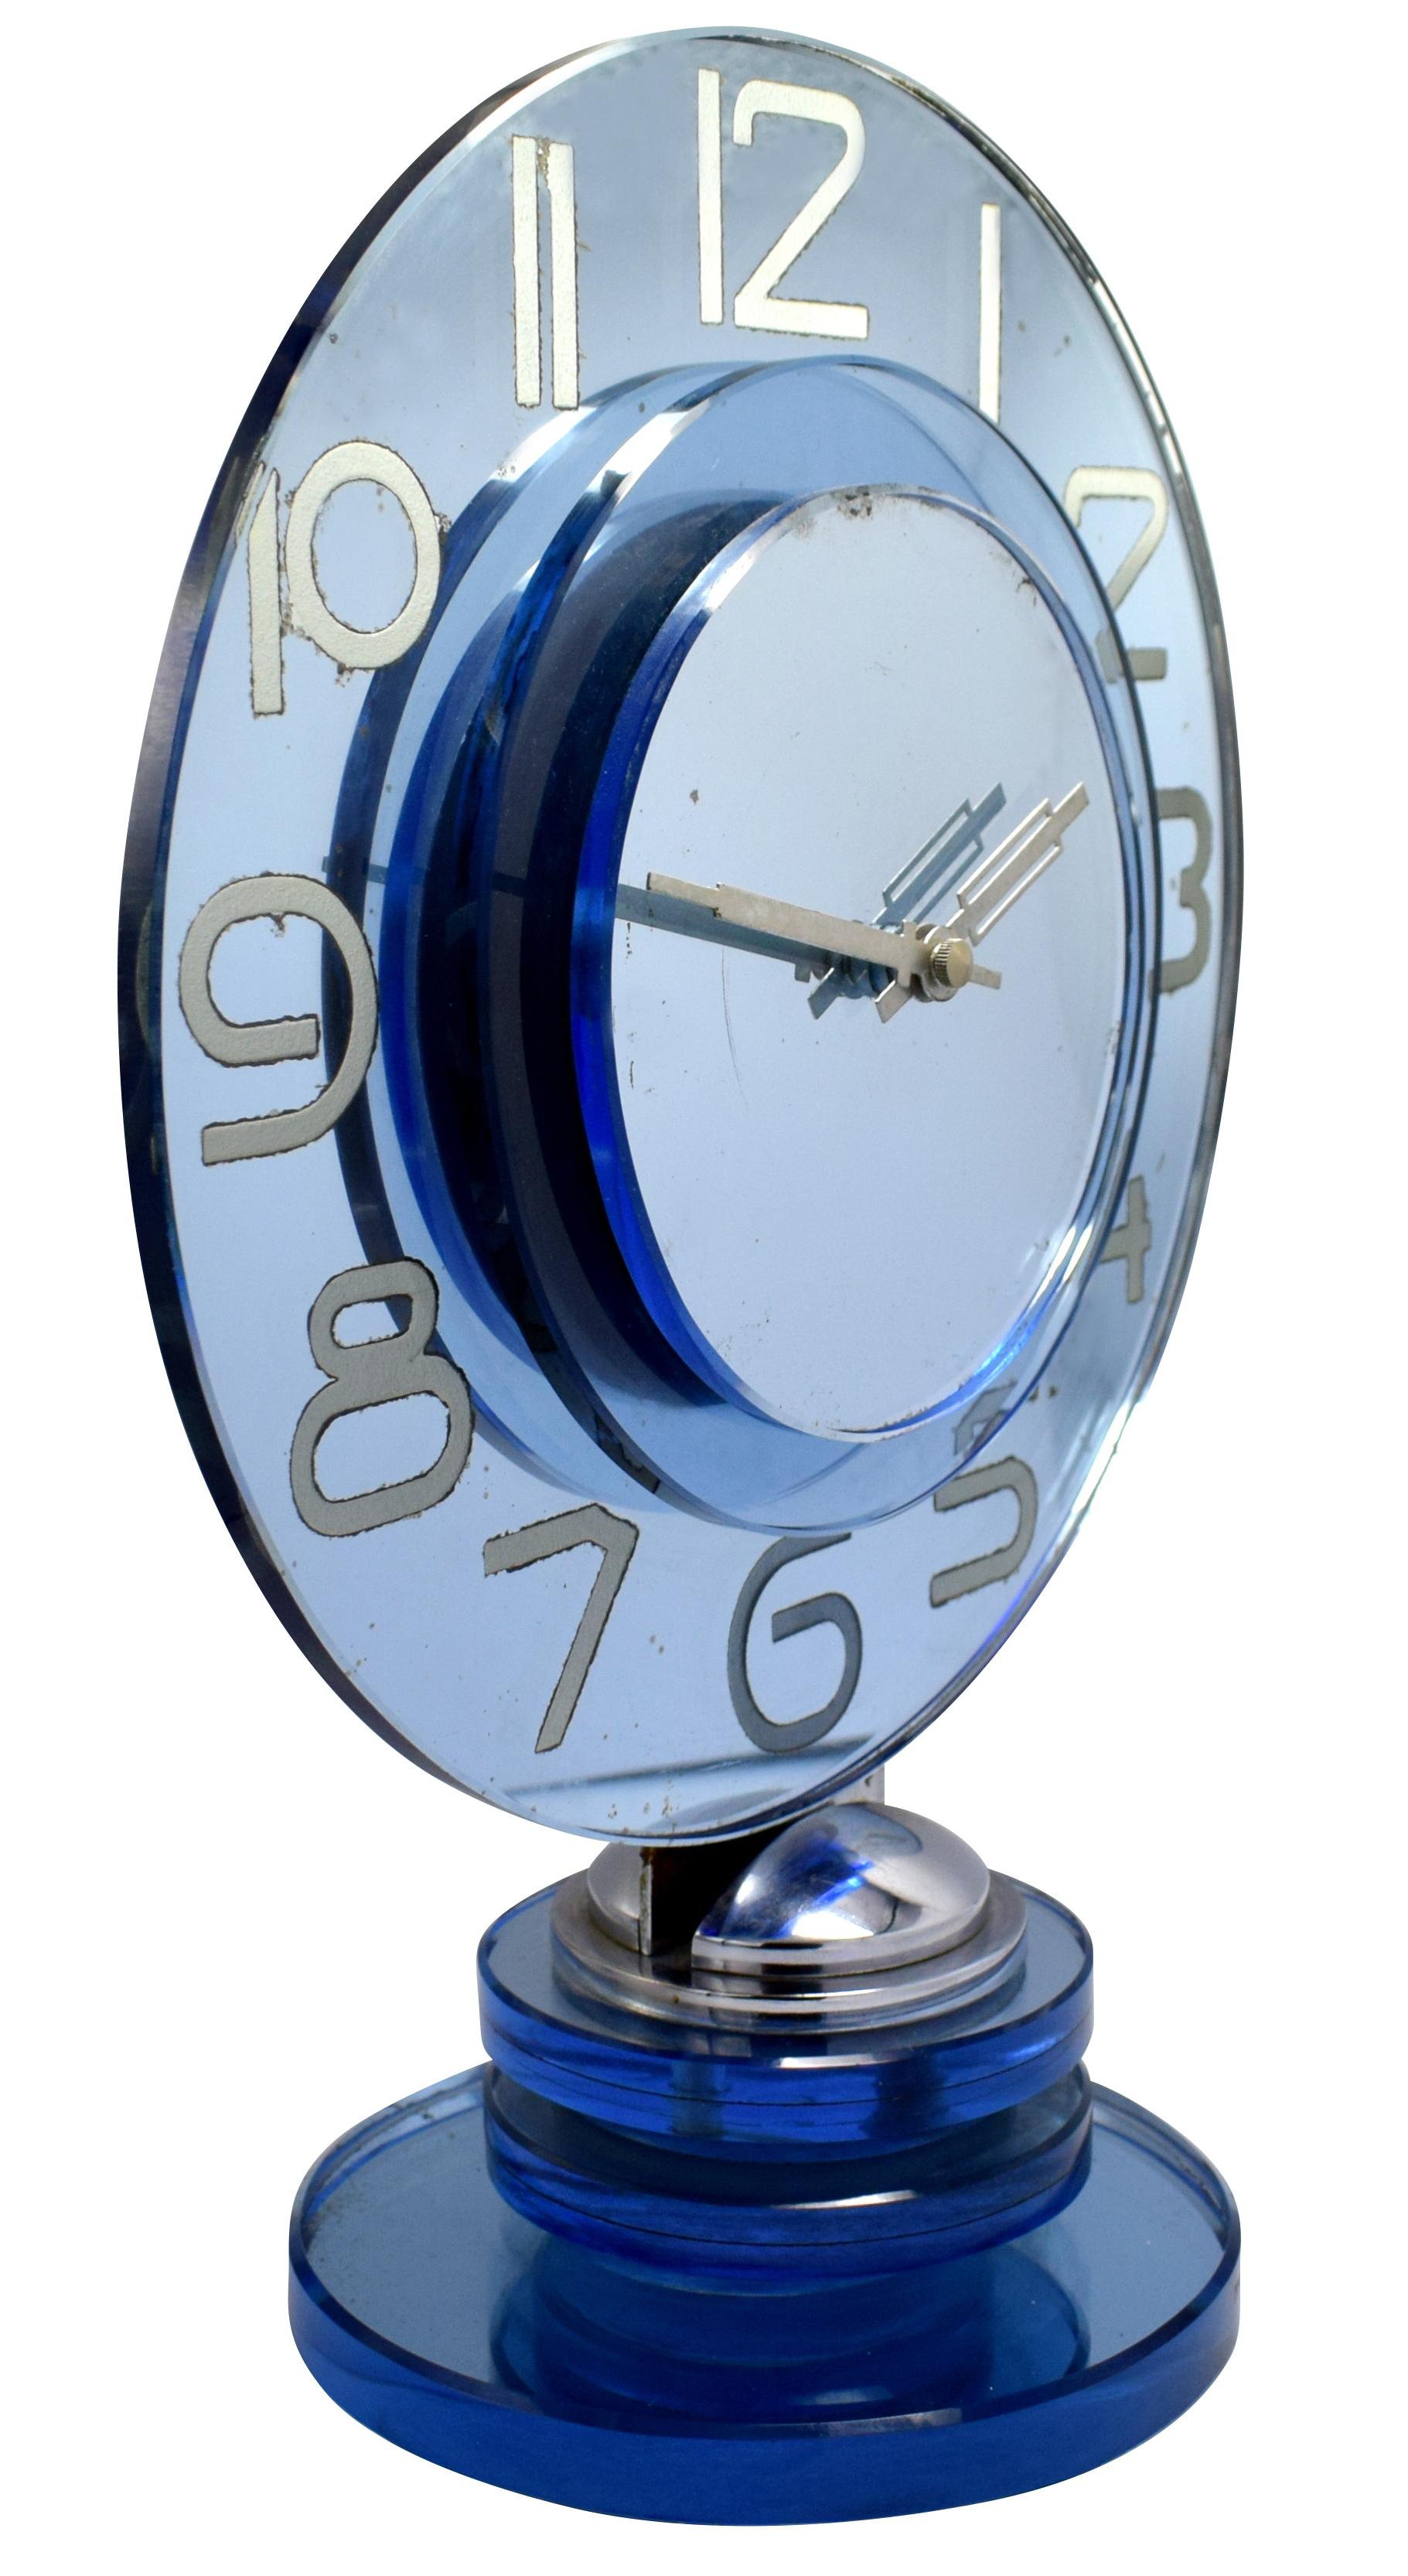 20th Century Large and Rare Model Modernist Art Deco Blue Mirror Clock, circa 1935 For Sale